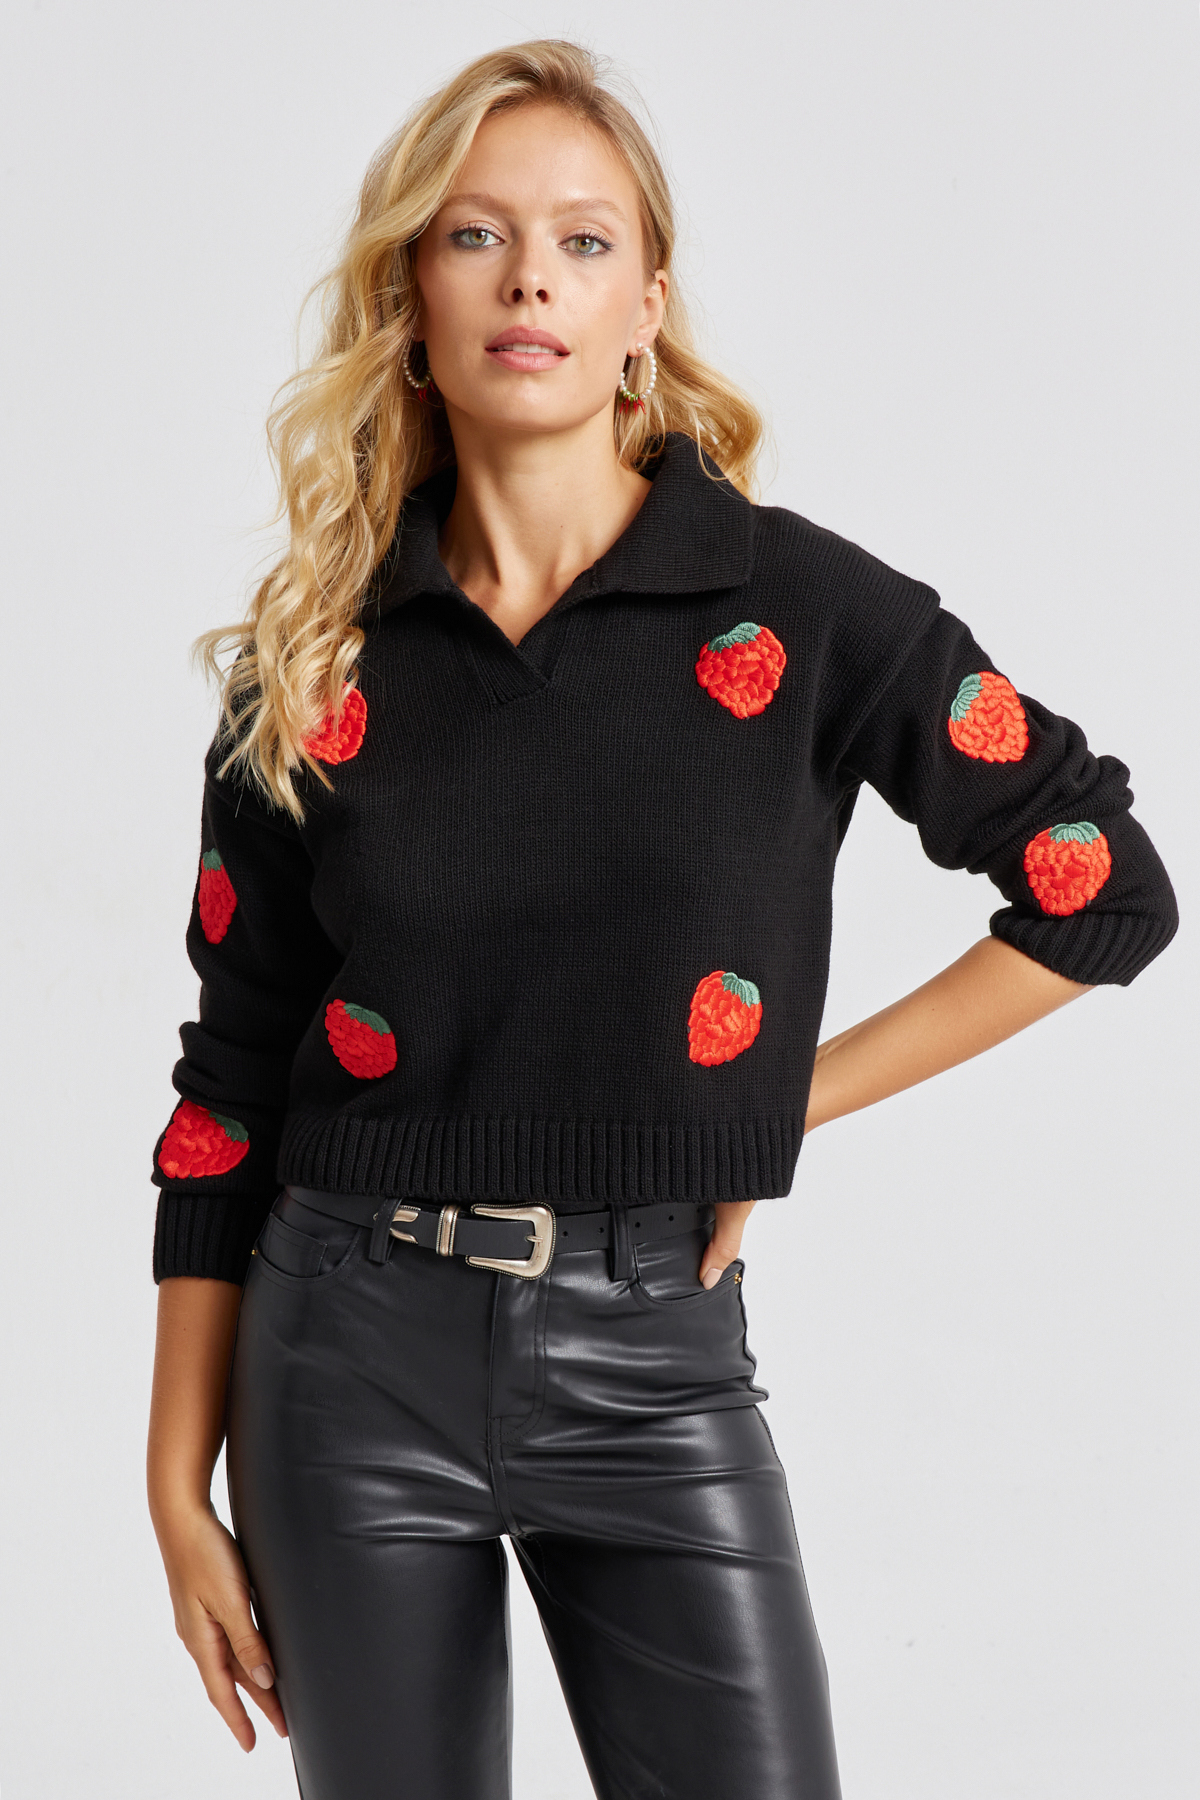 Cool & Sexy Women's Black Strawberry Patterned Knitwear Sweater